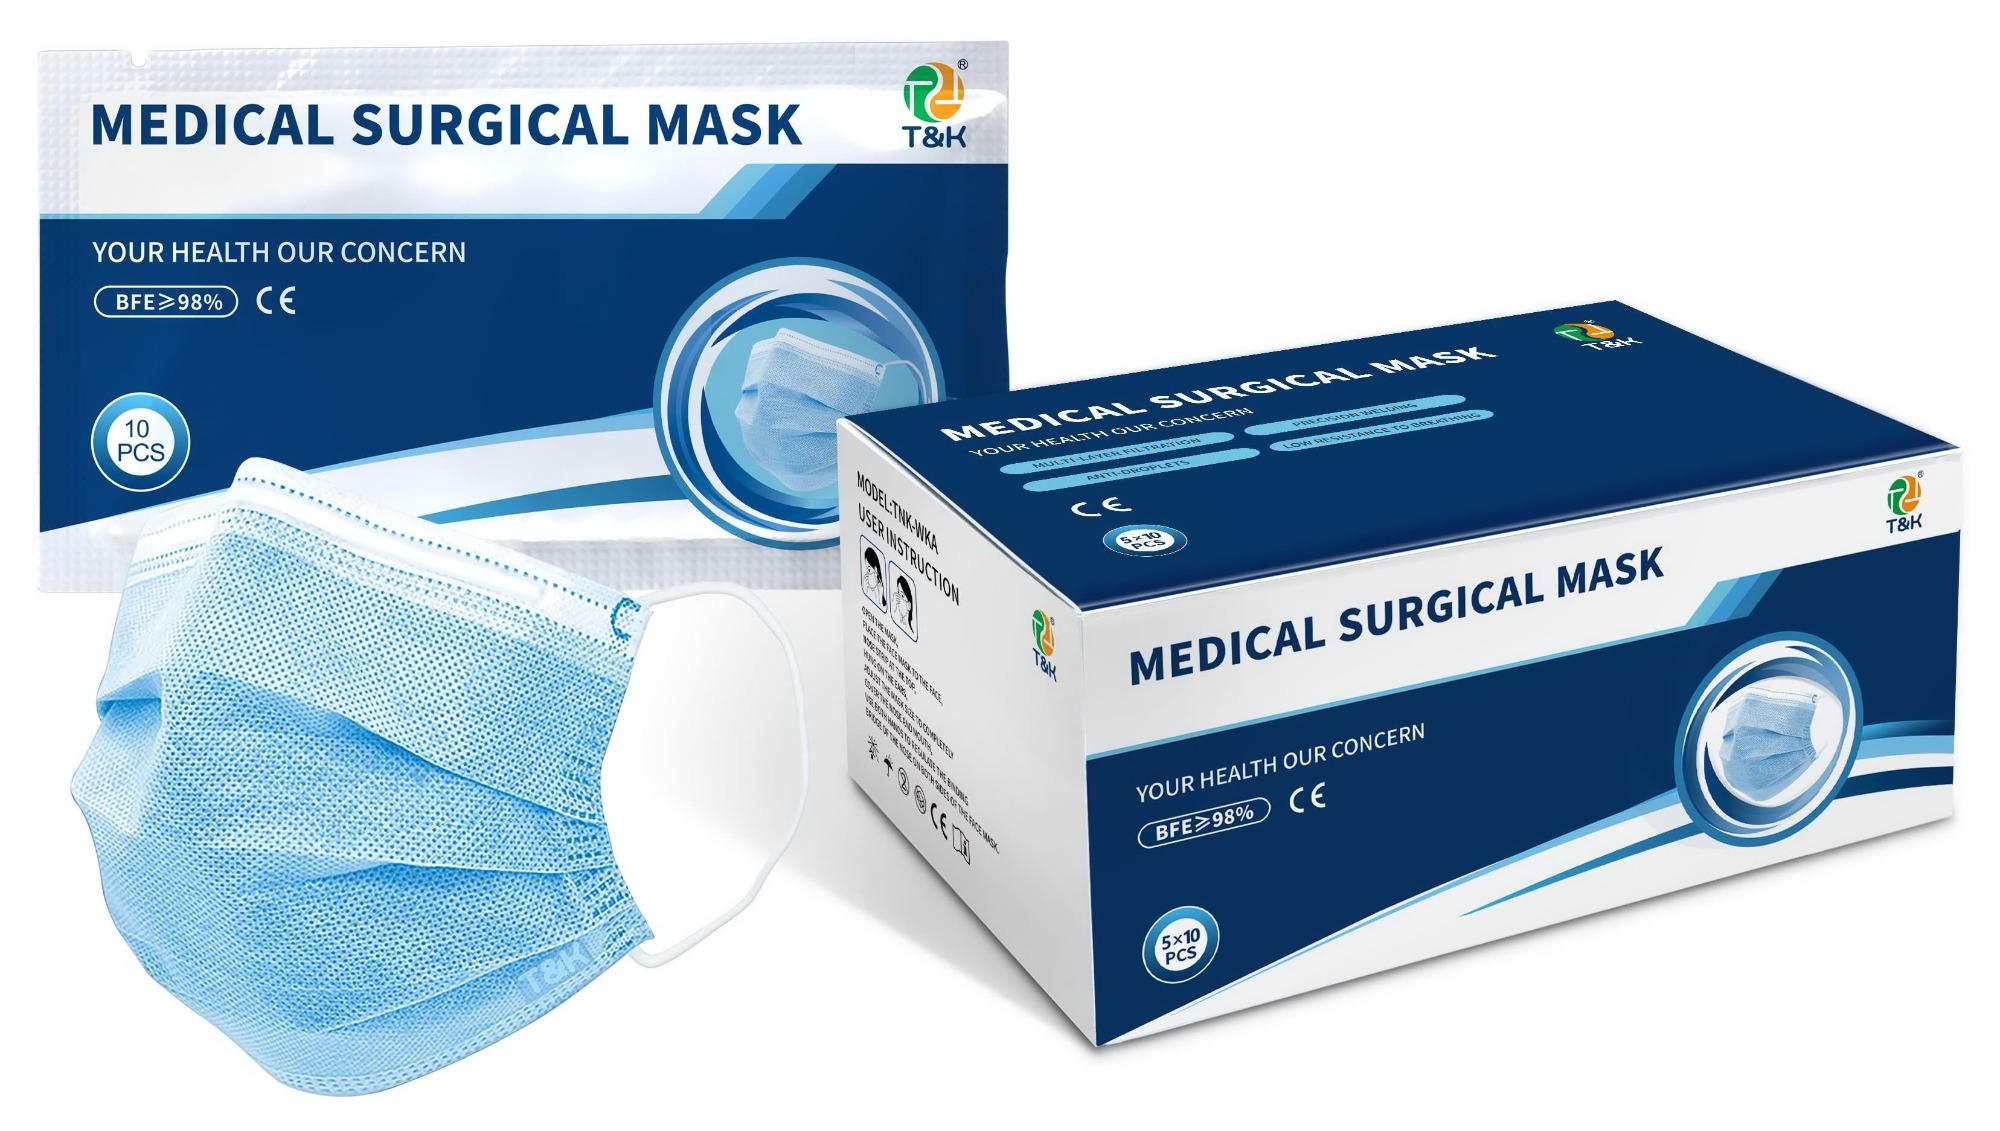 Type IIR madical surgical mask